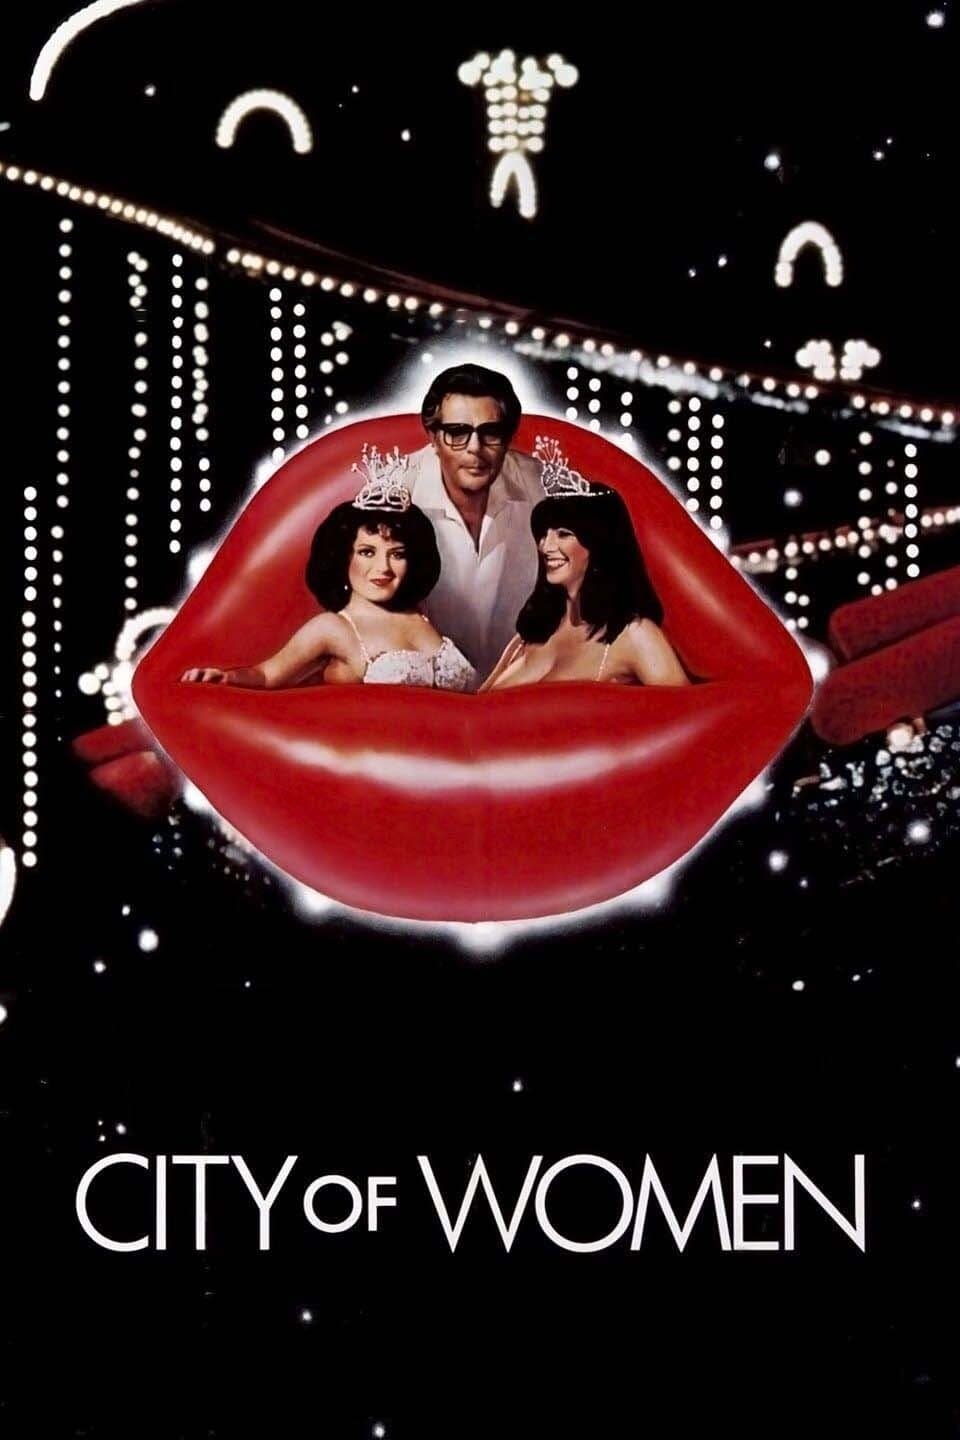 City of Women (1980)